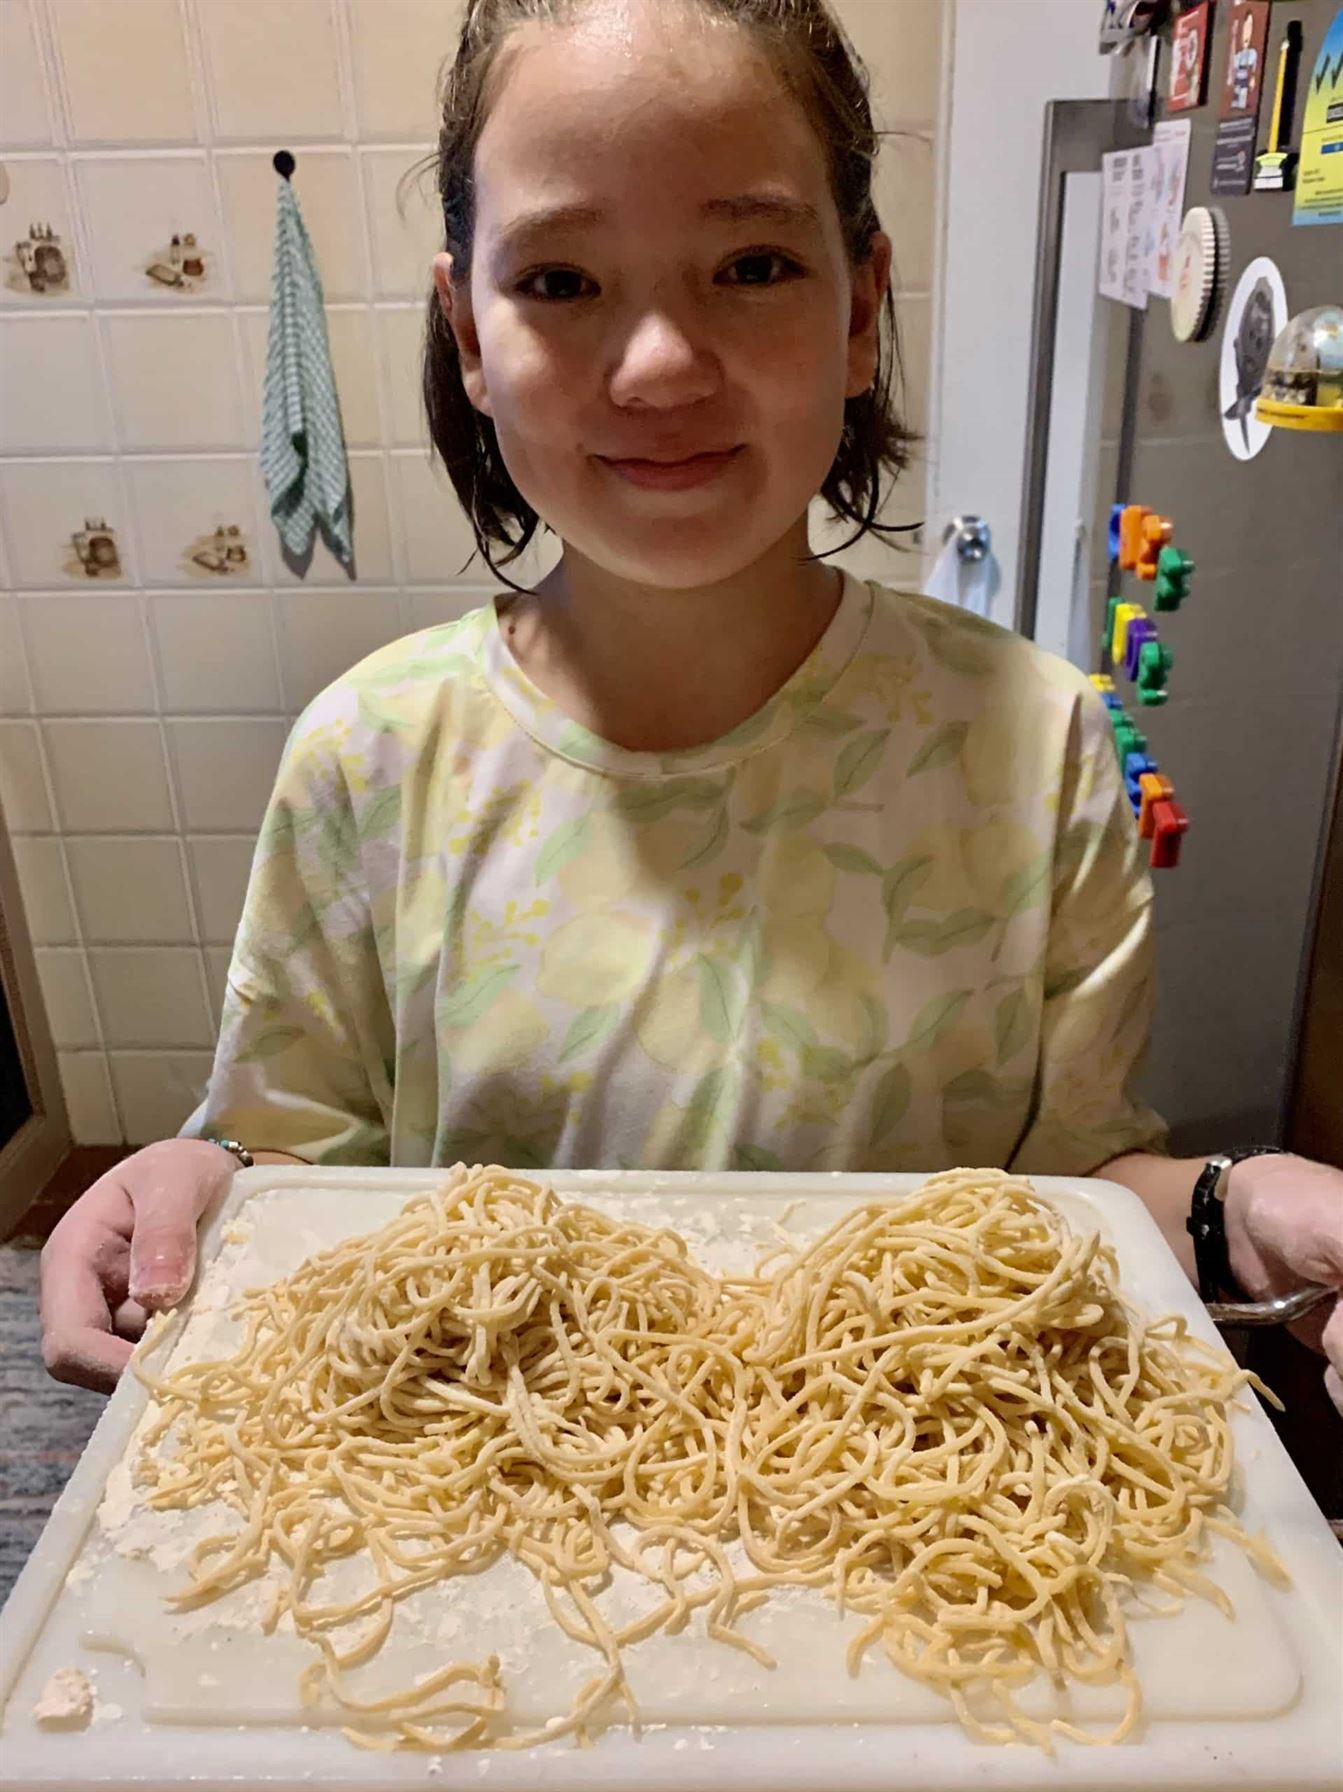 ChillaxBBQ Stay@Home Recipes #40 - Home-Made Spaghetti Carbonara